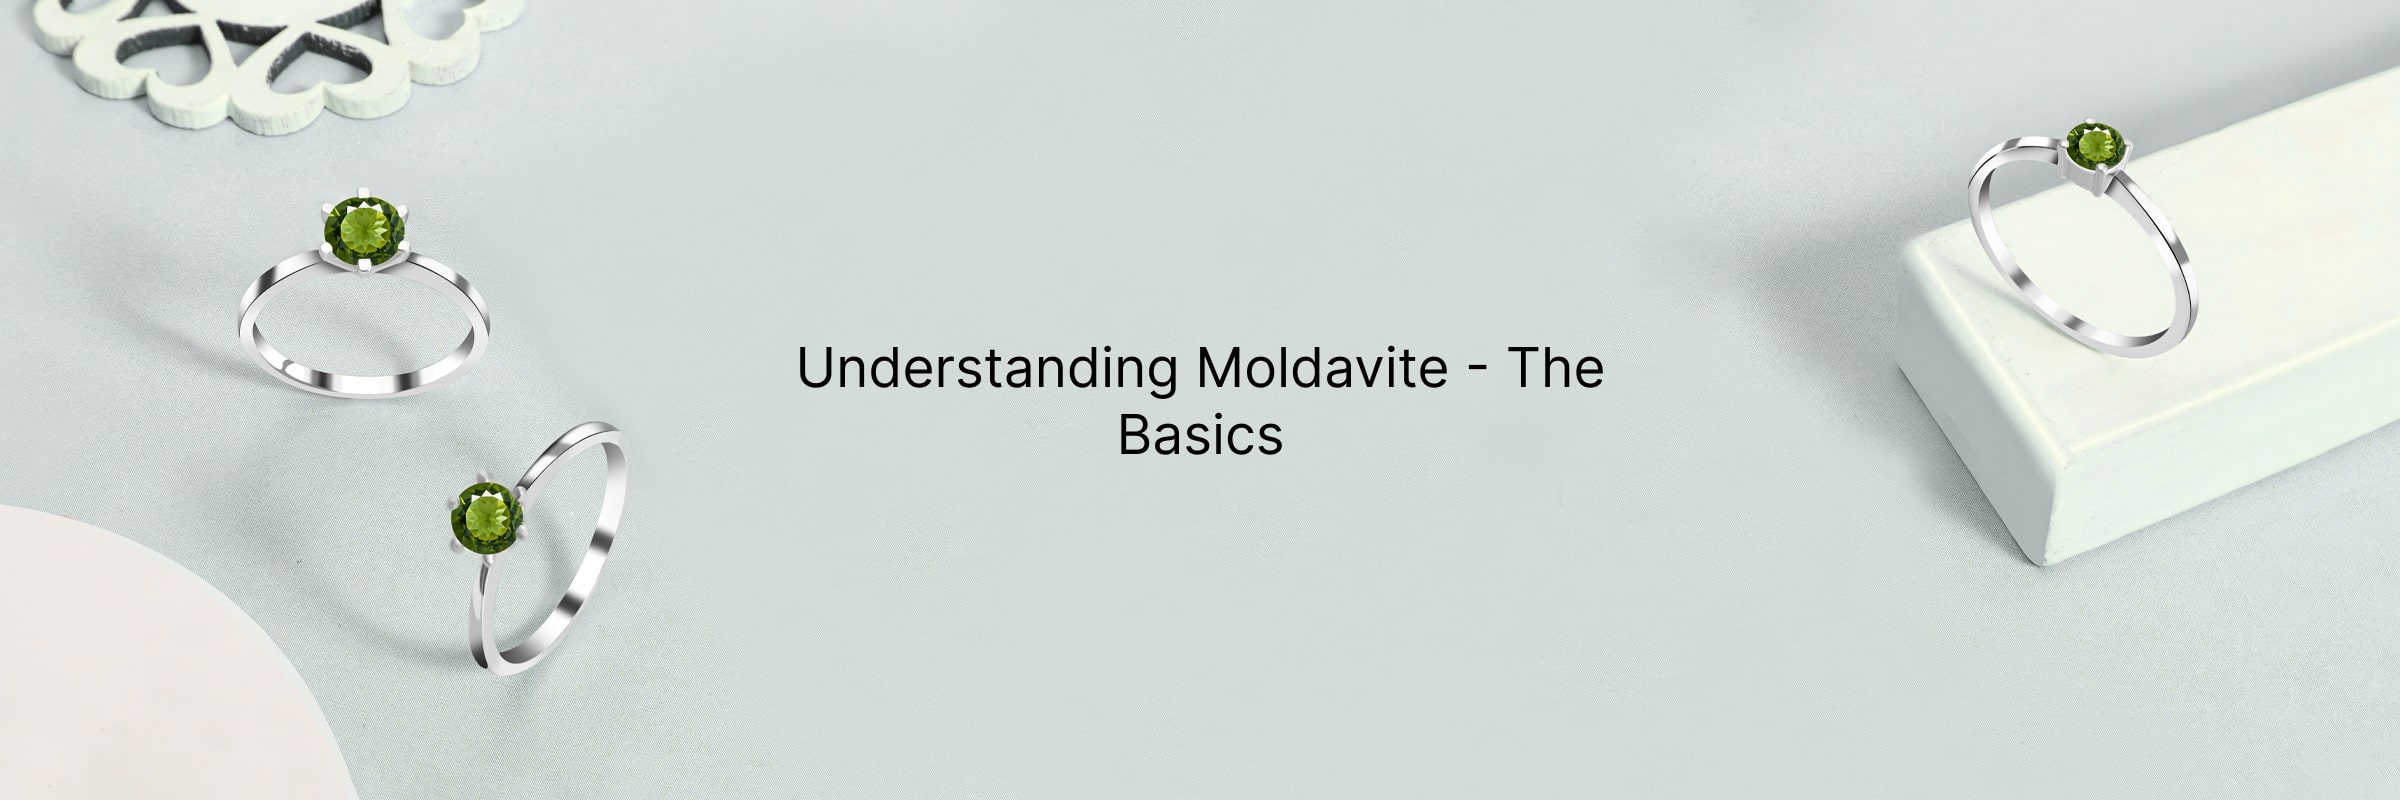 What Moldavite Basically Is